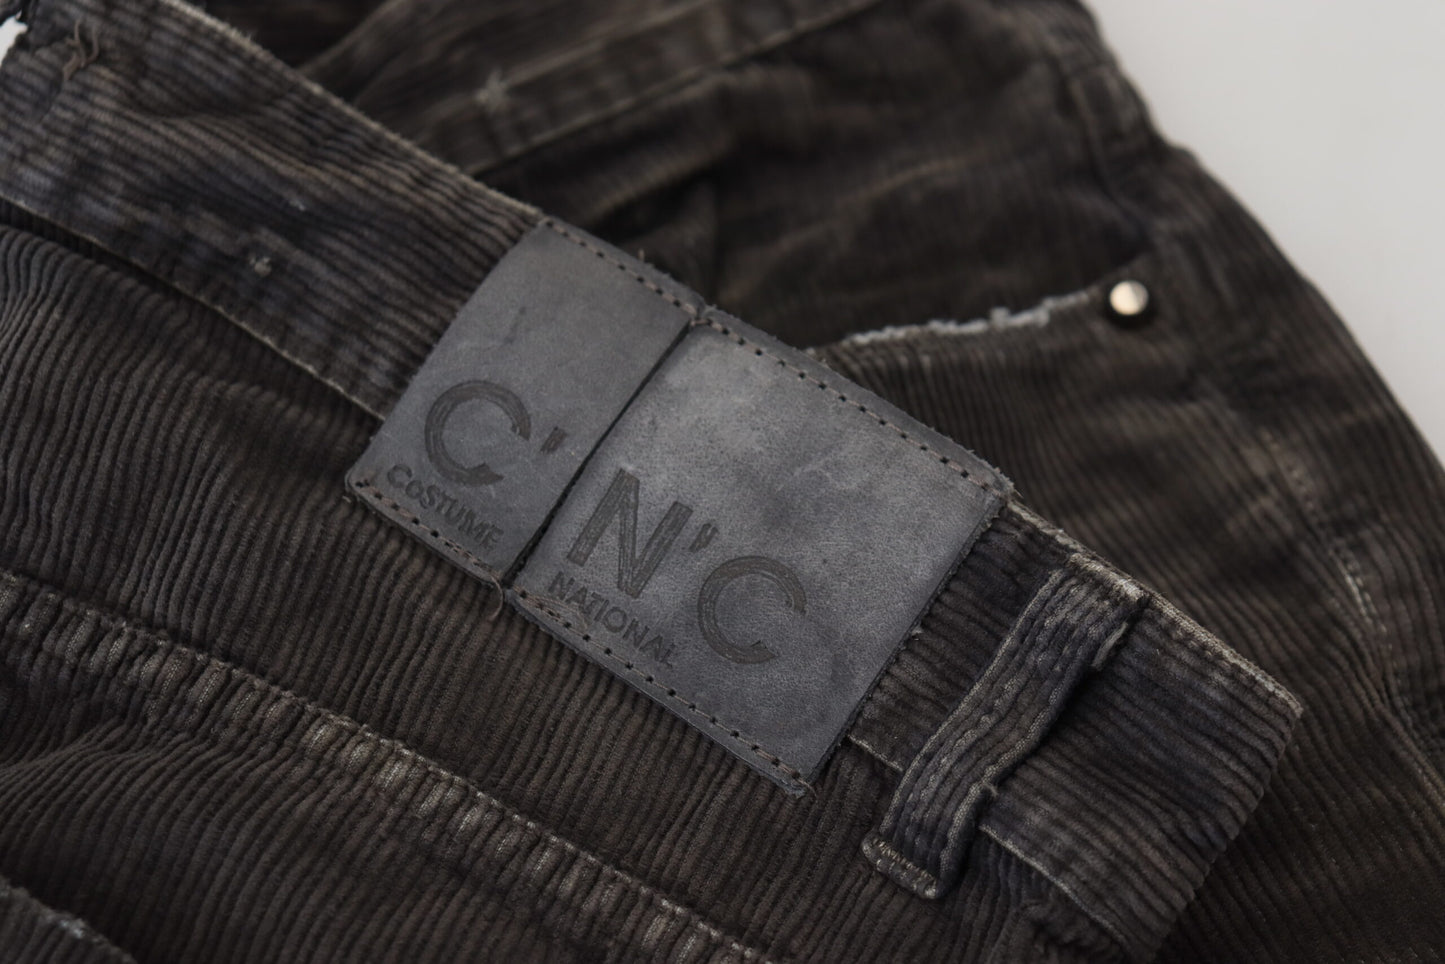 Stylish Gray Corduroy Denim Jeans